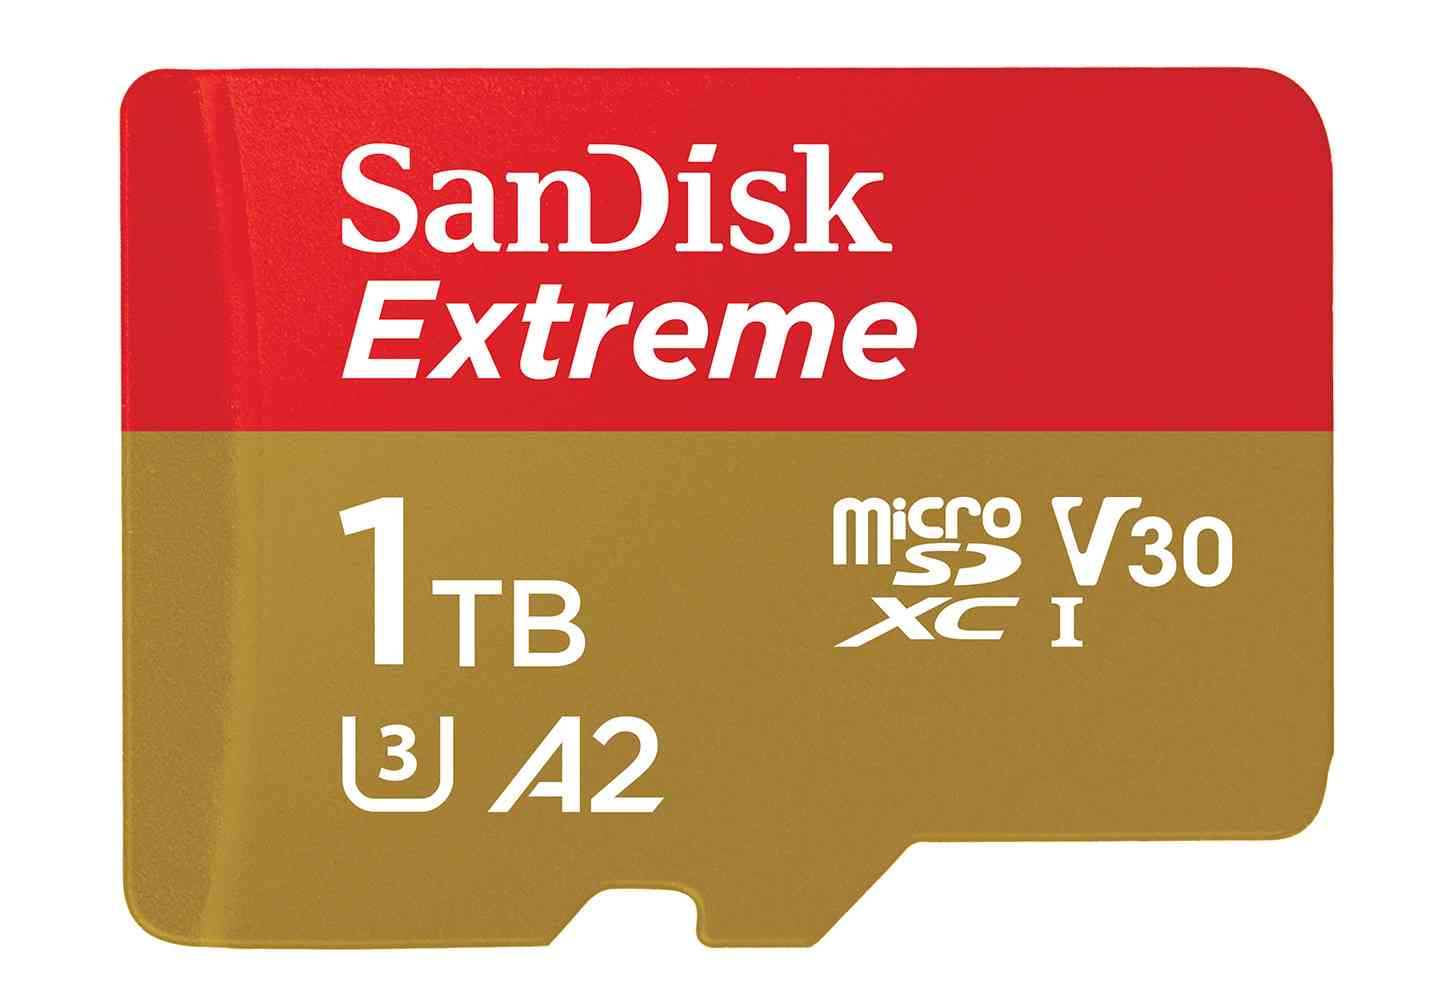 SanDisk 1TB microSD card official